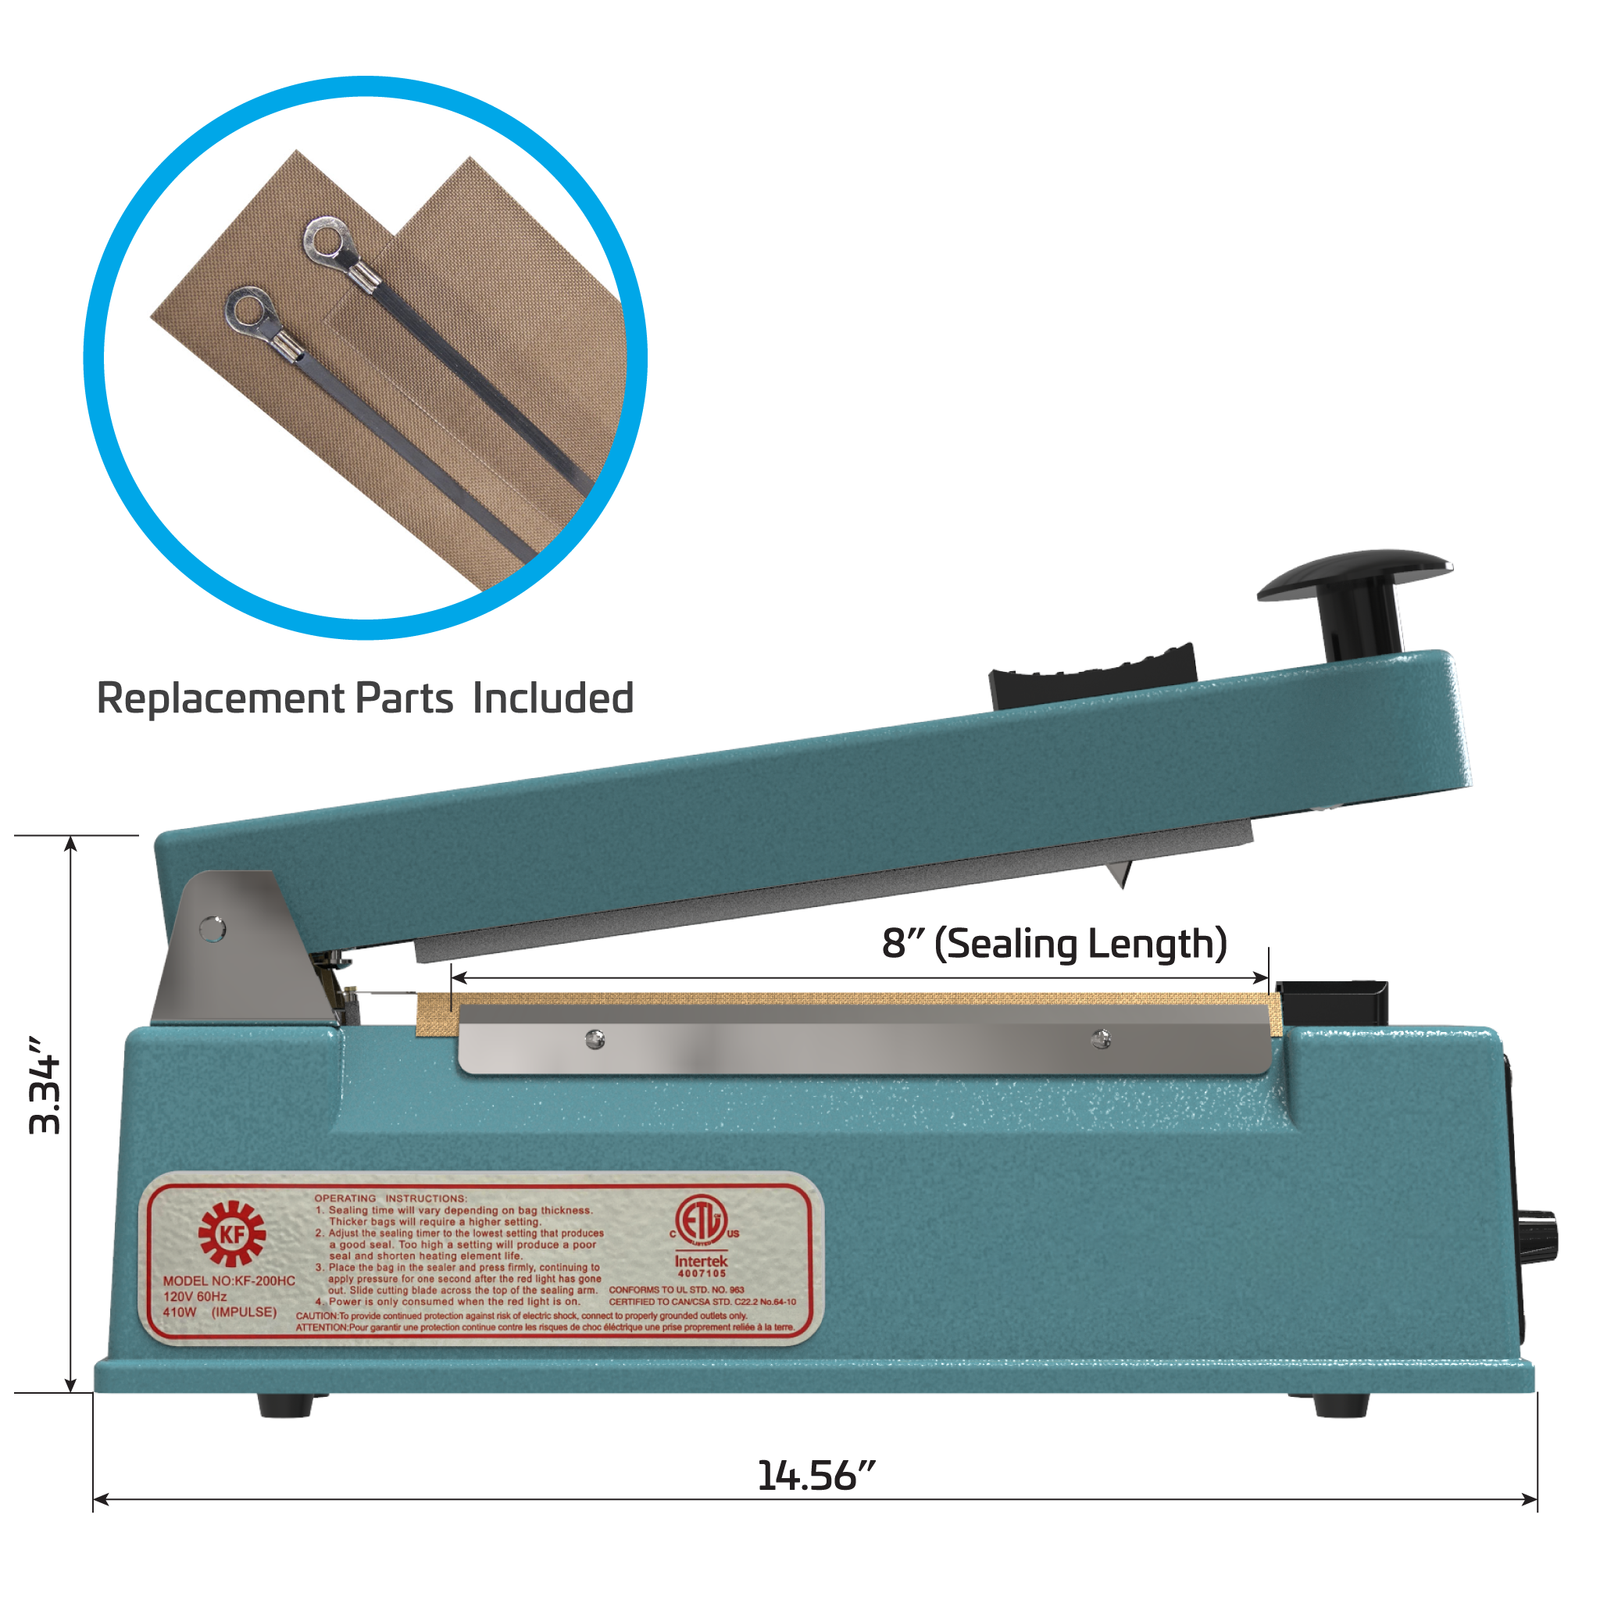 Manual impulse sealer with machine measurements. Features read 